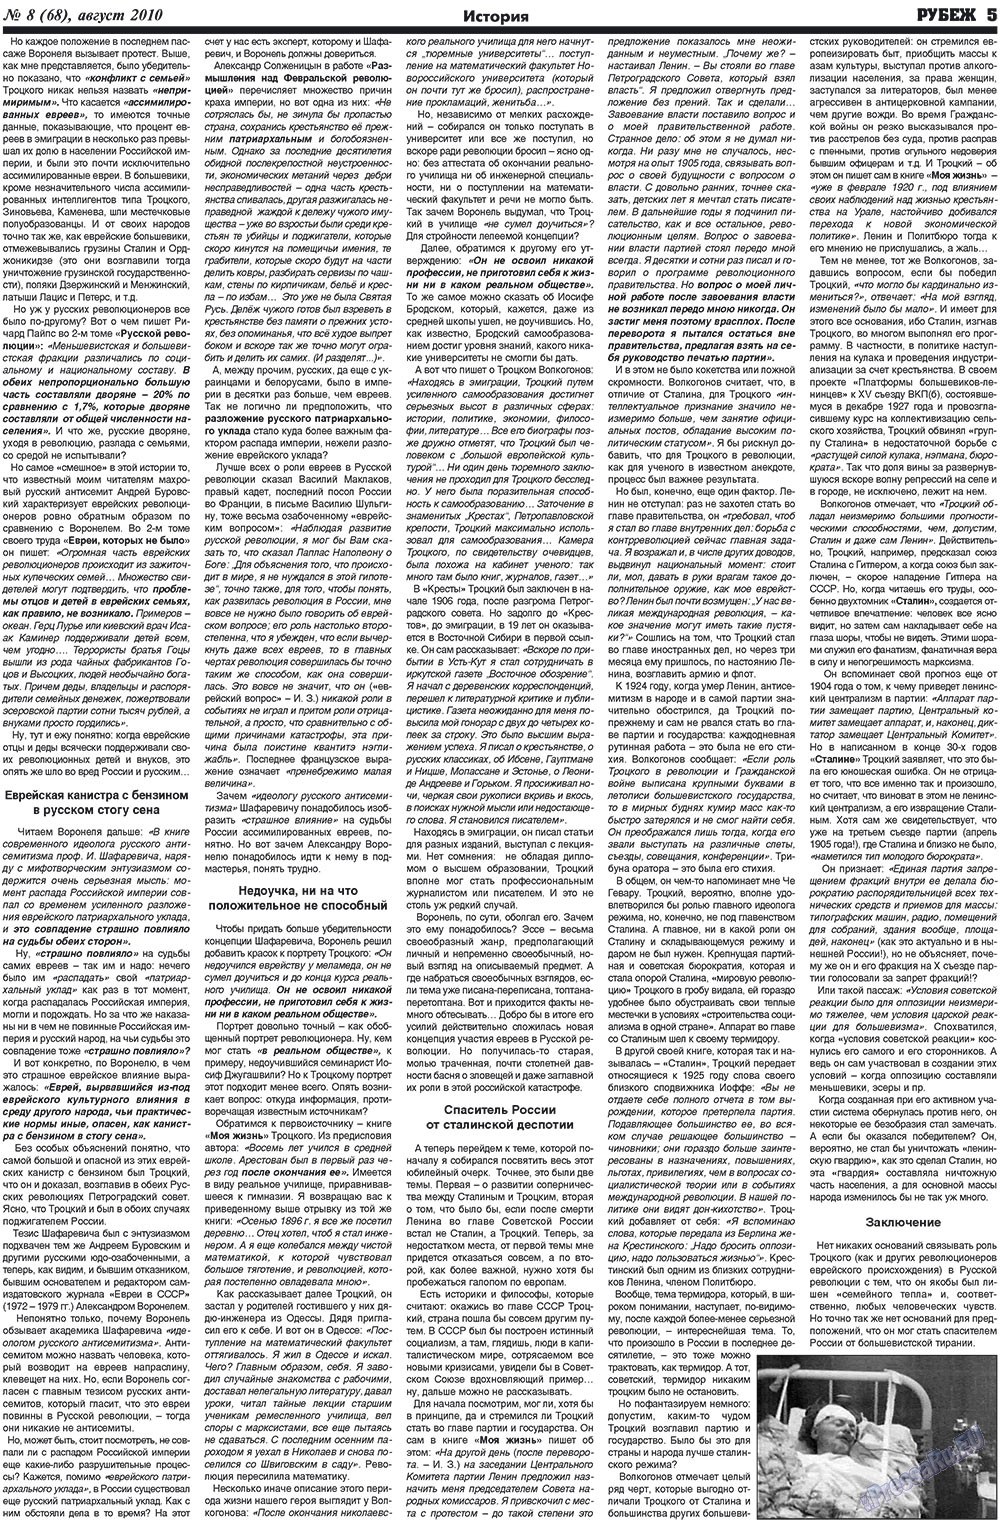 Рубеж, газета. 2010 №8 стр.5